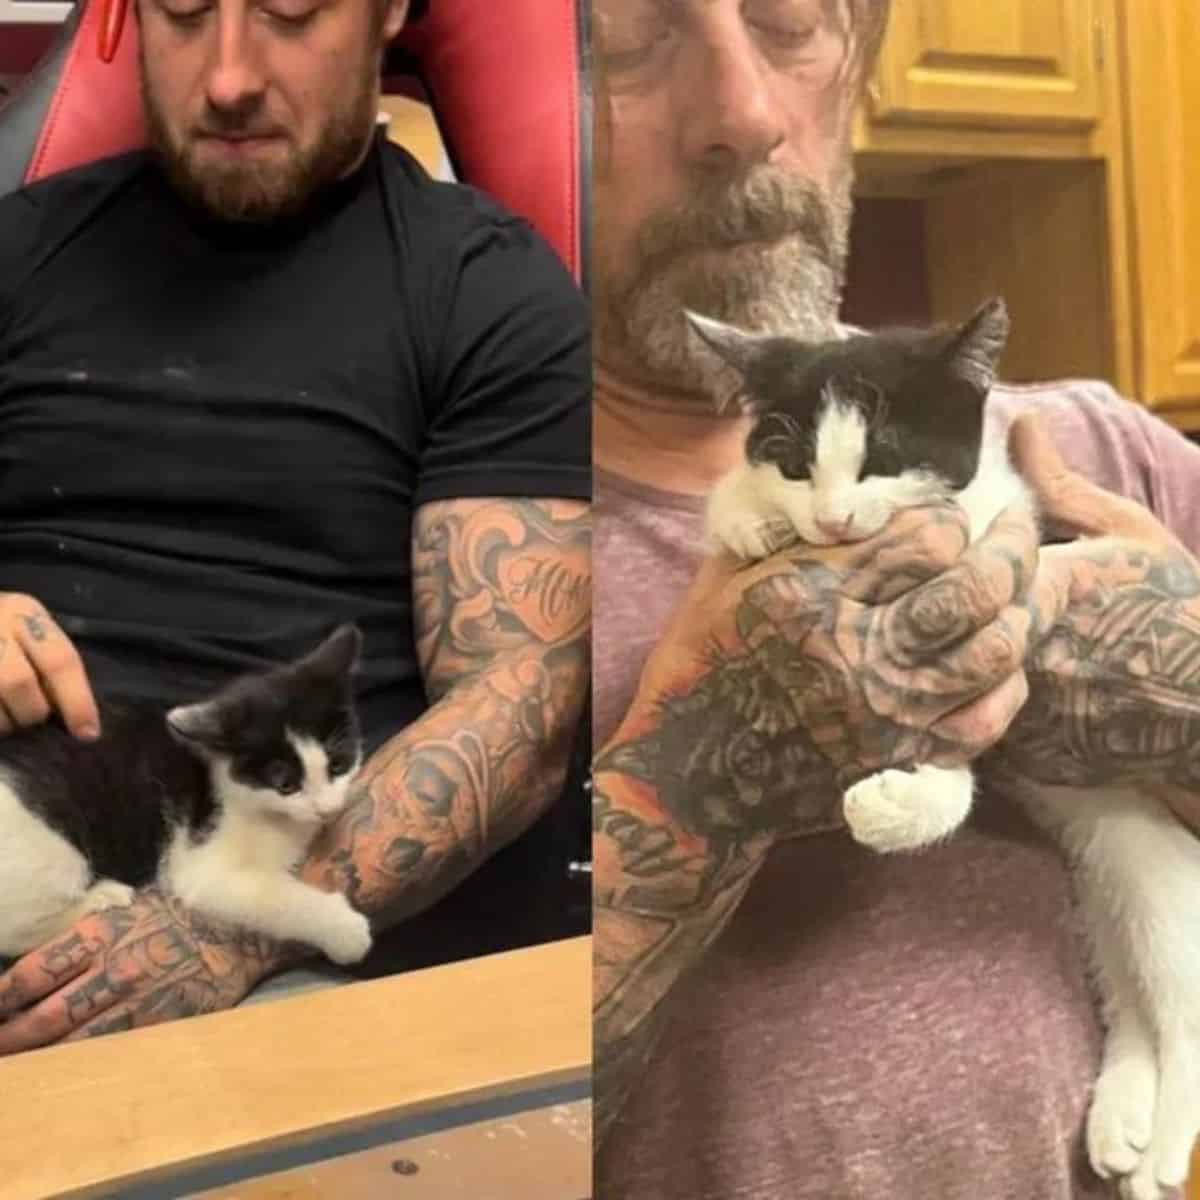 tatooed guy holding a cat